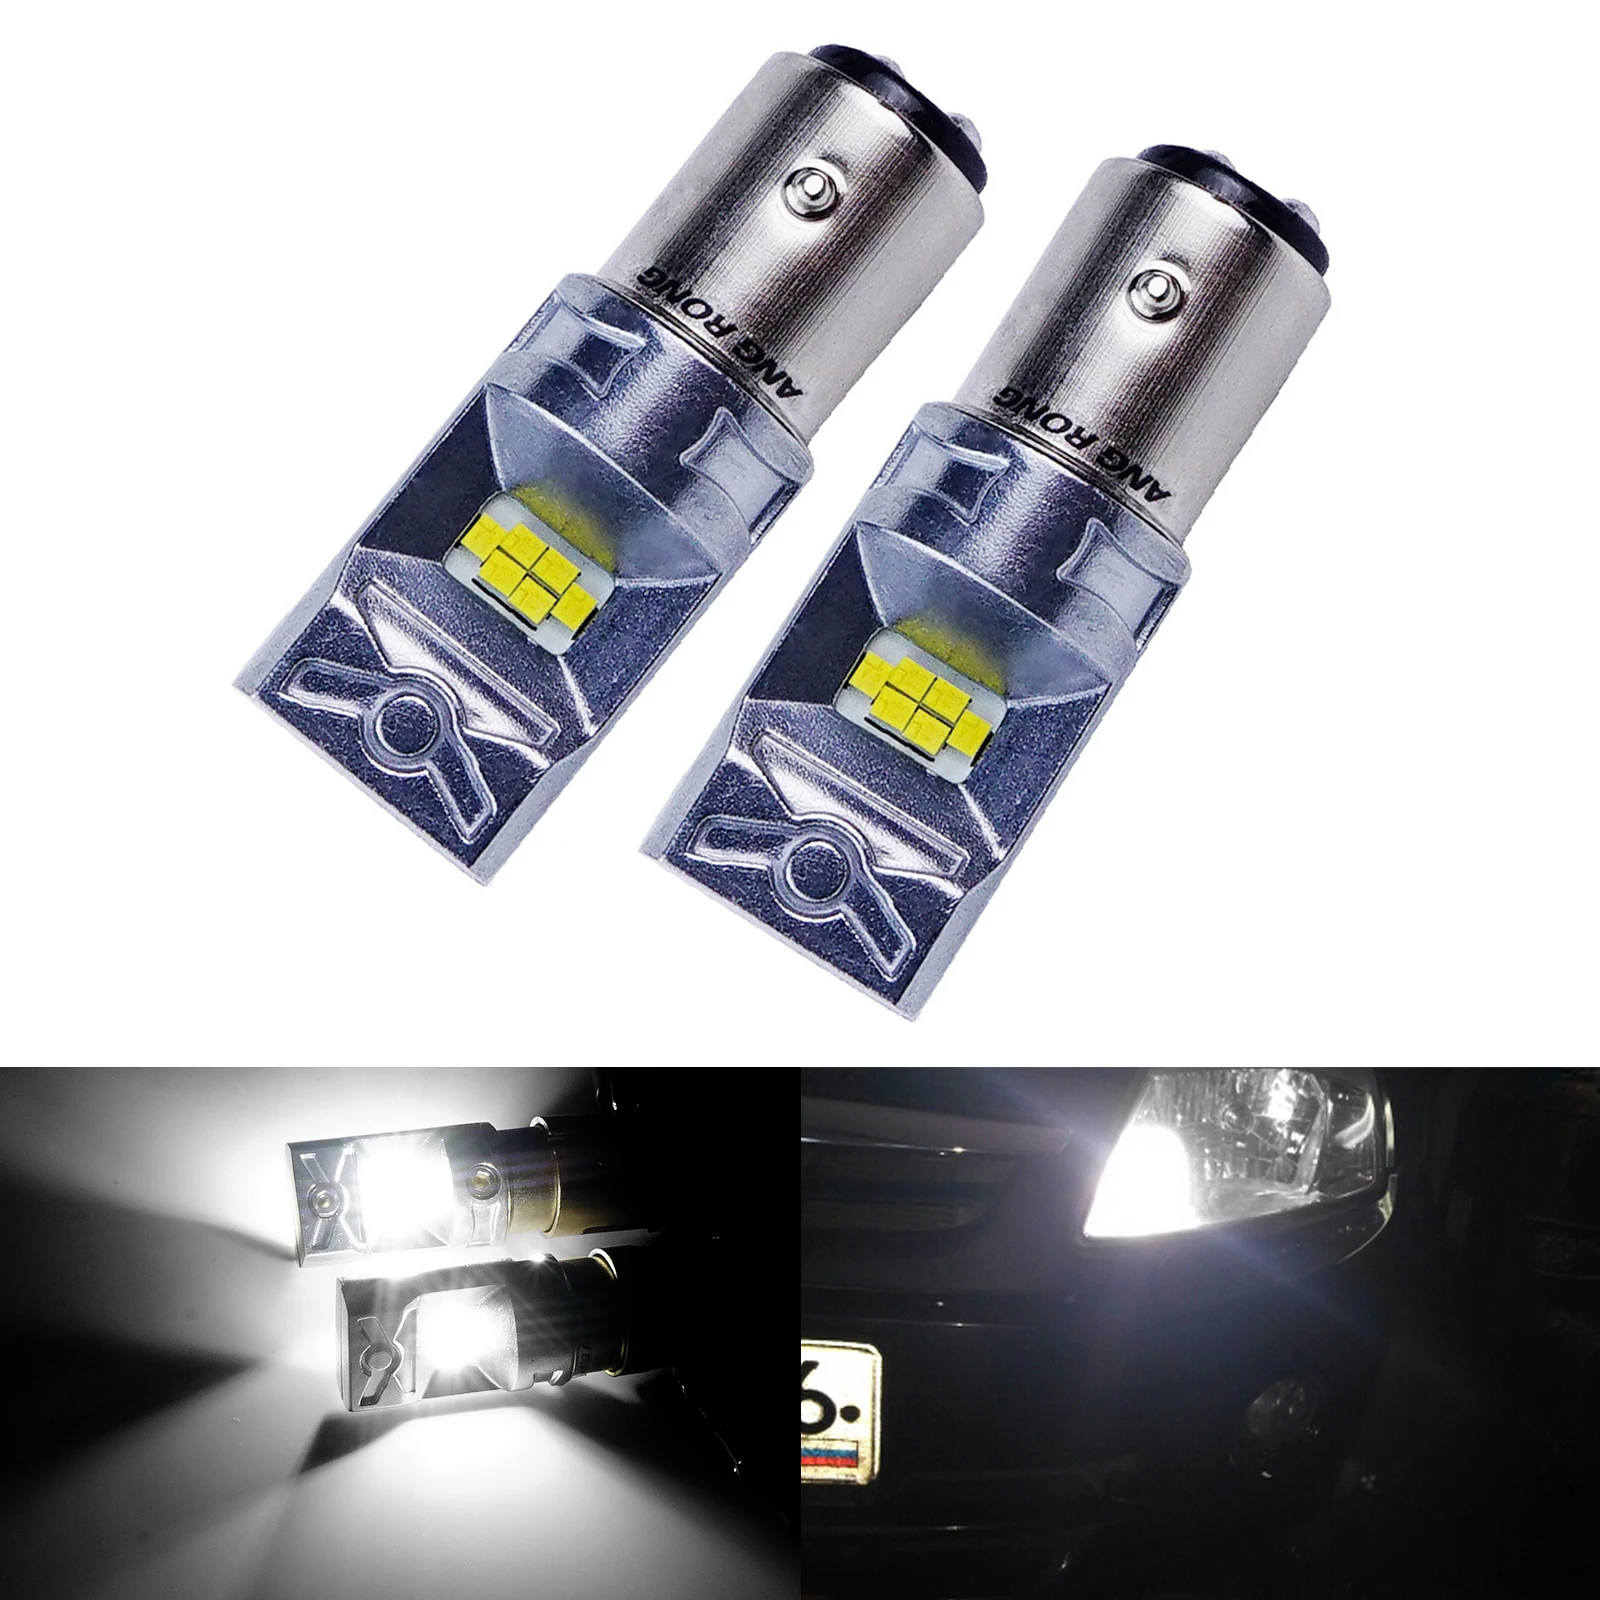 

ANGRONG 2x P21/5W 380 1157 BAY15d LED 10W Car Reverse Brake Stop Tail Light Bulbs White